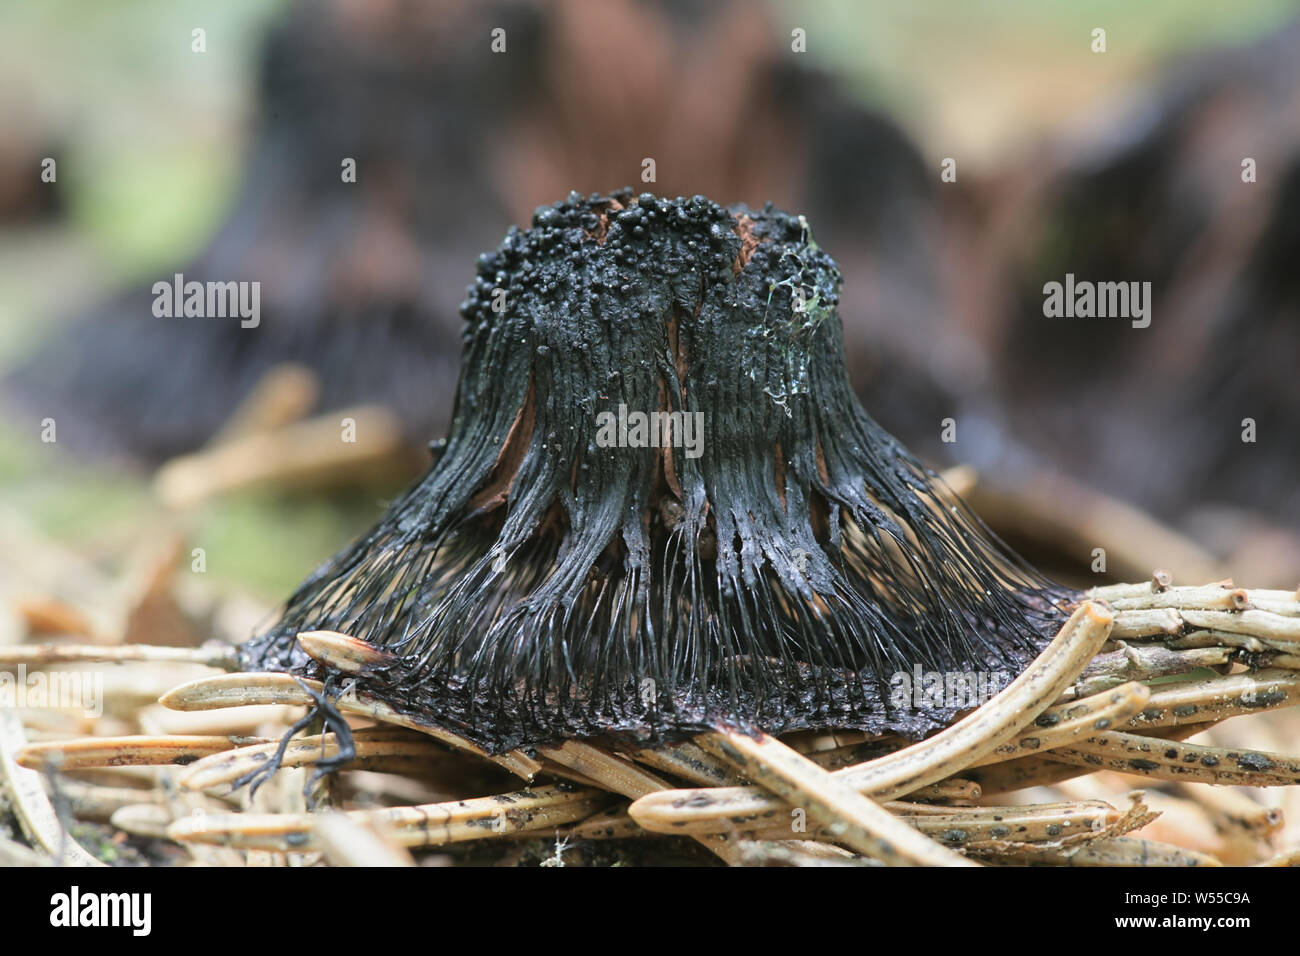 Stemonitis axifera, known as the chocolate tube slime mold Stock Photo